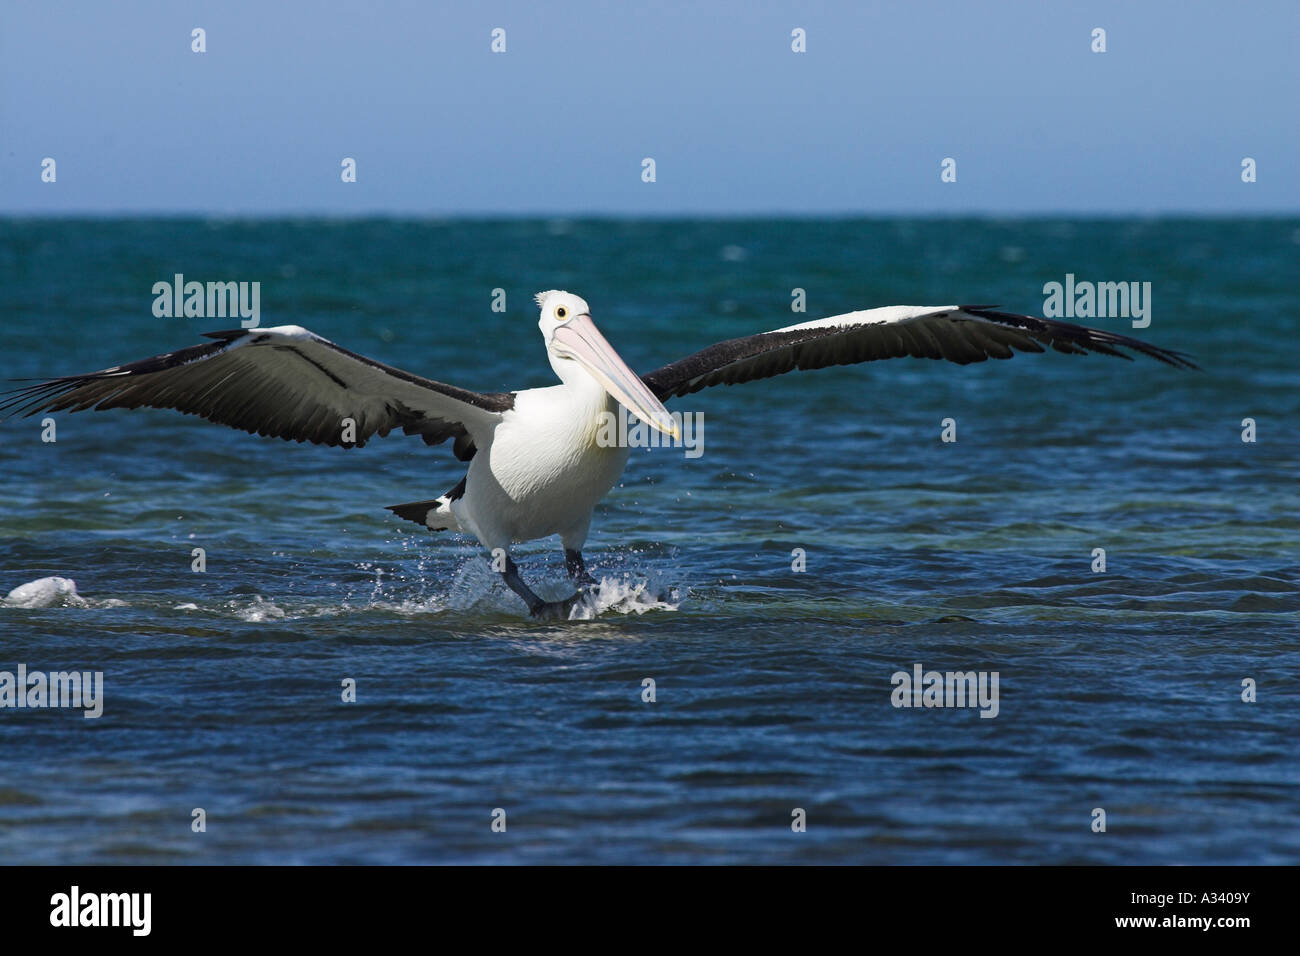 australian pelican, pelecanus conspicillatus, landing on water Stock Photo